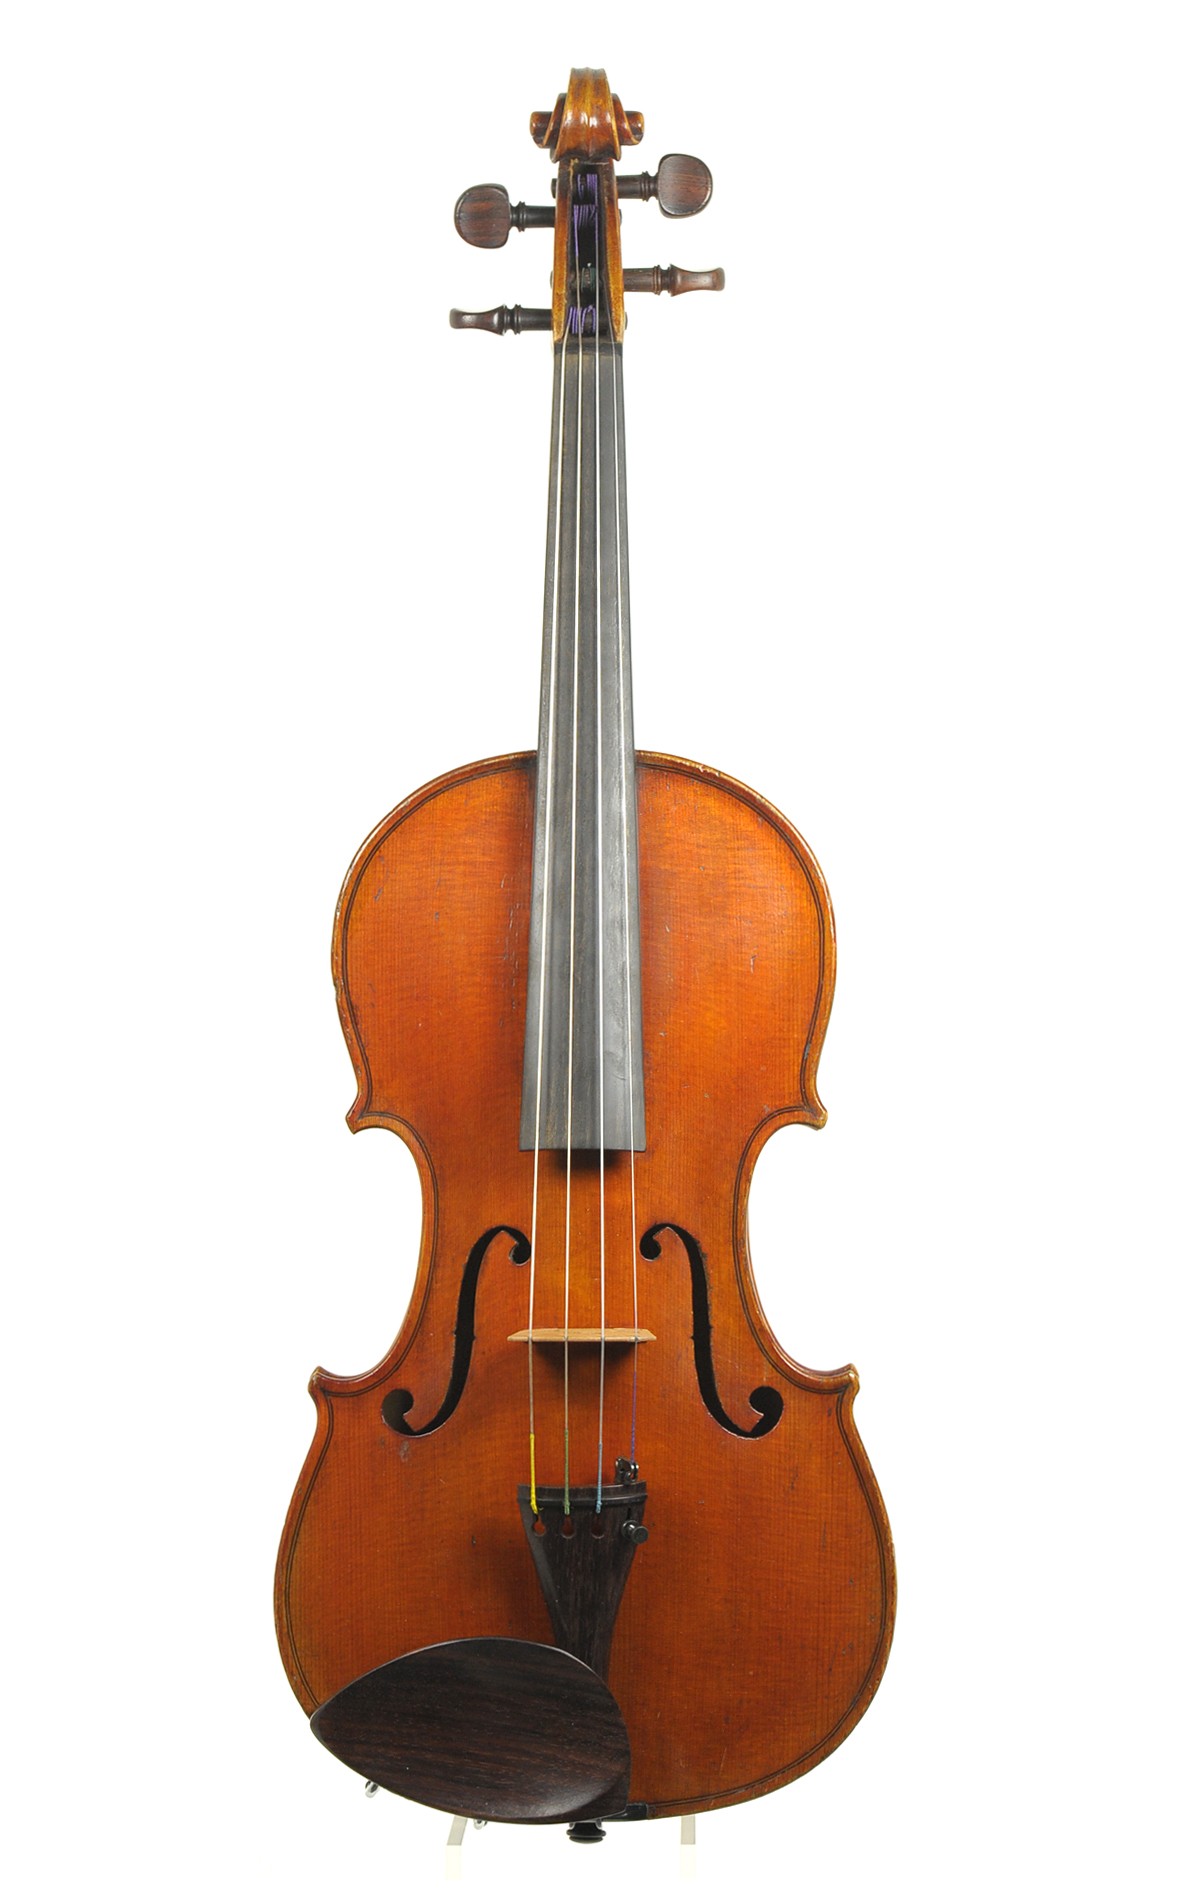 Antique English violin, Emanuel Whitmarsh, London, 1893 - top